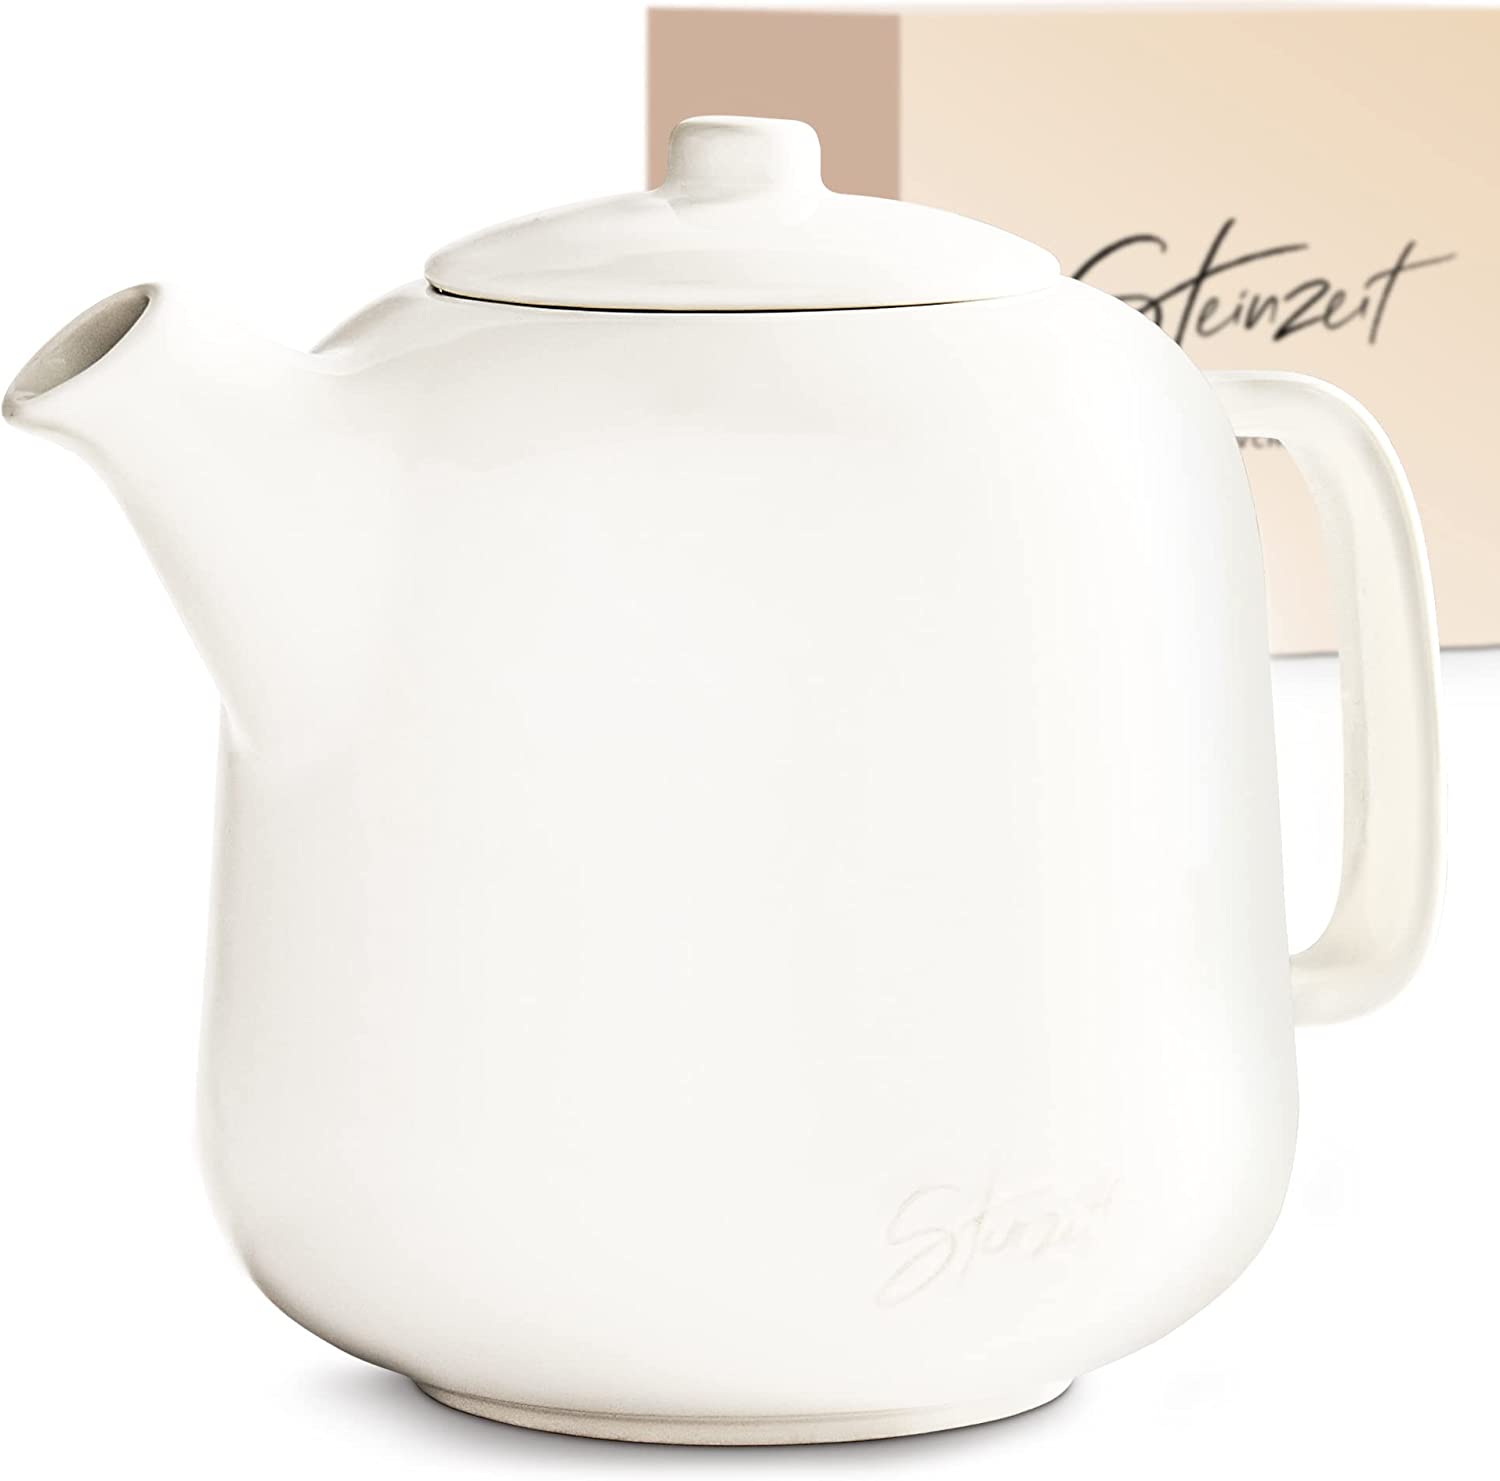 Steinzeit Designer Teapot (1.3 L) - Teapot with Strainer Insert Made of 304 Stainless Steel - Ceramic Teapot with Unique Glaze - Removable Teapot with Strainer - White